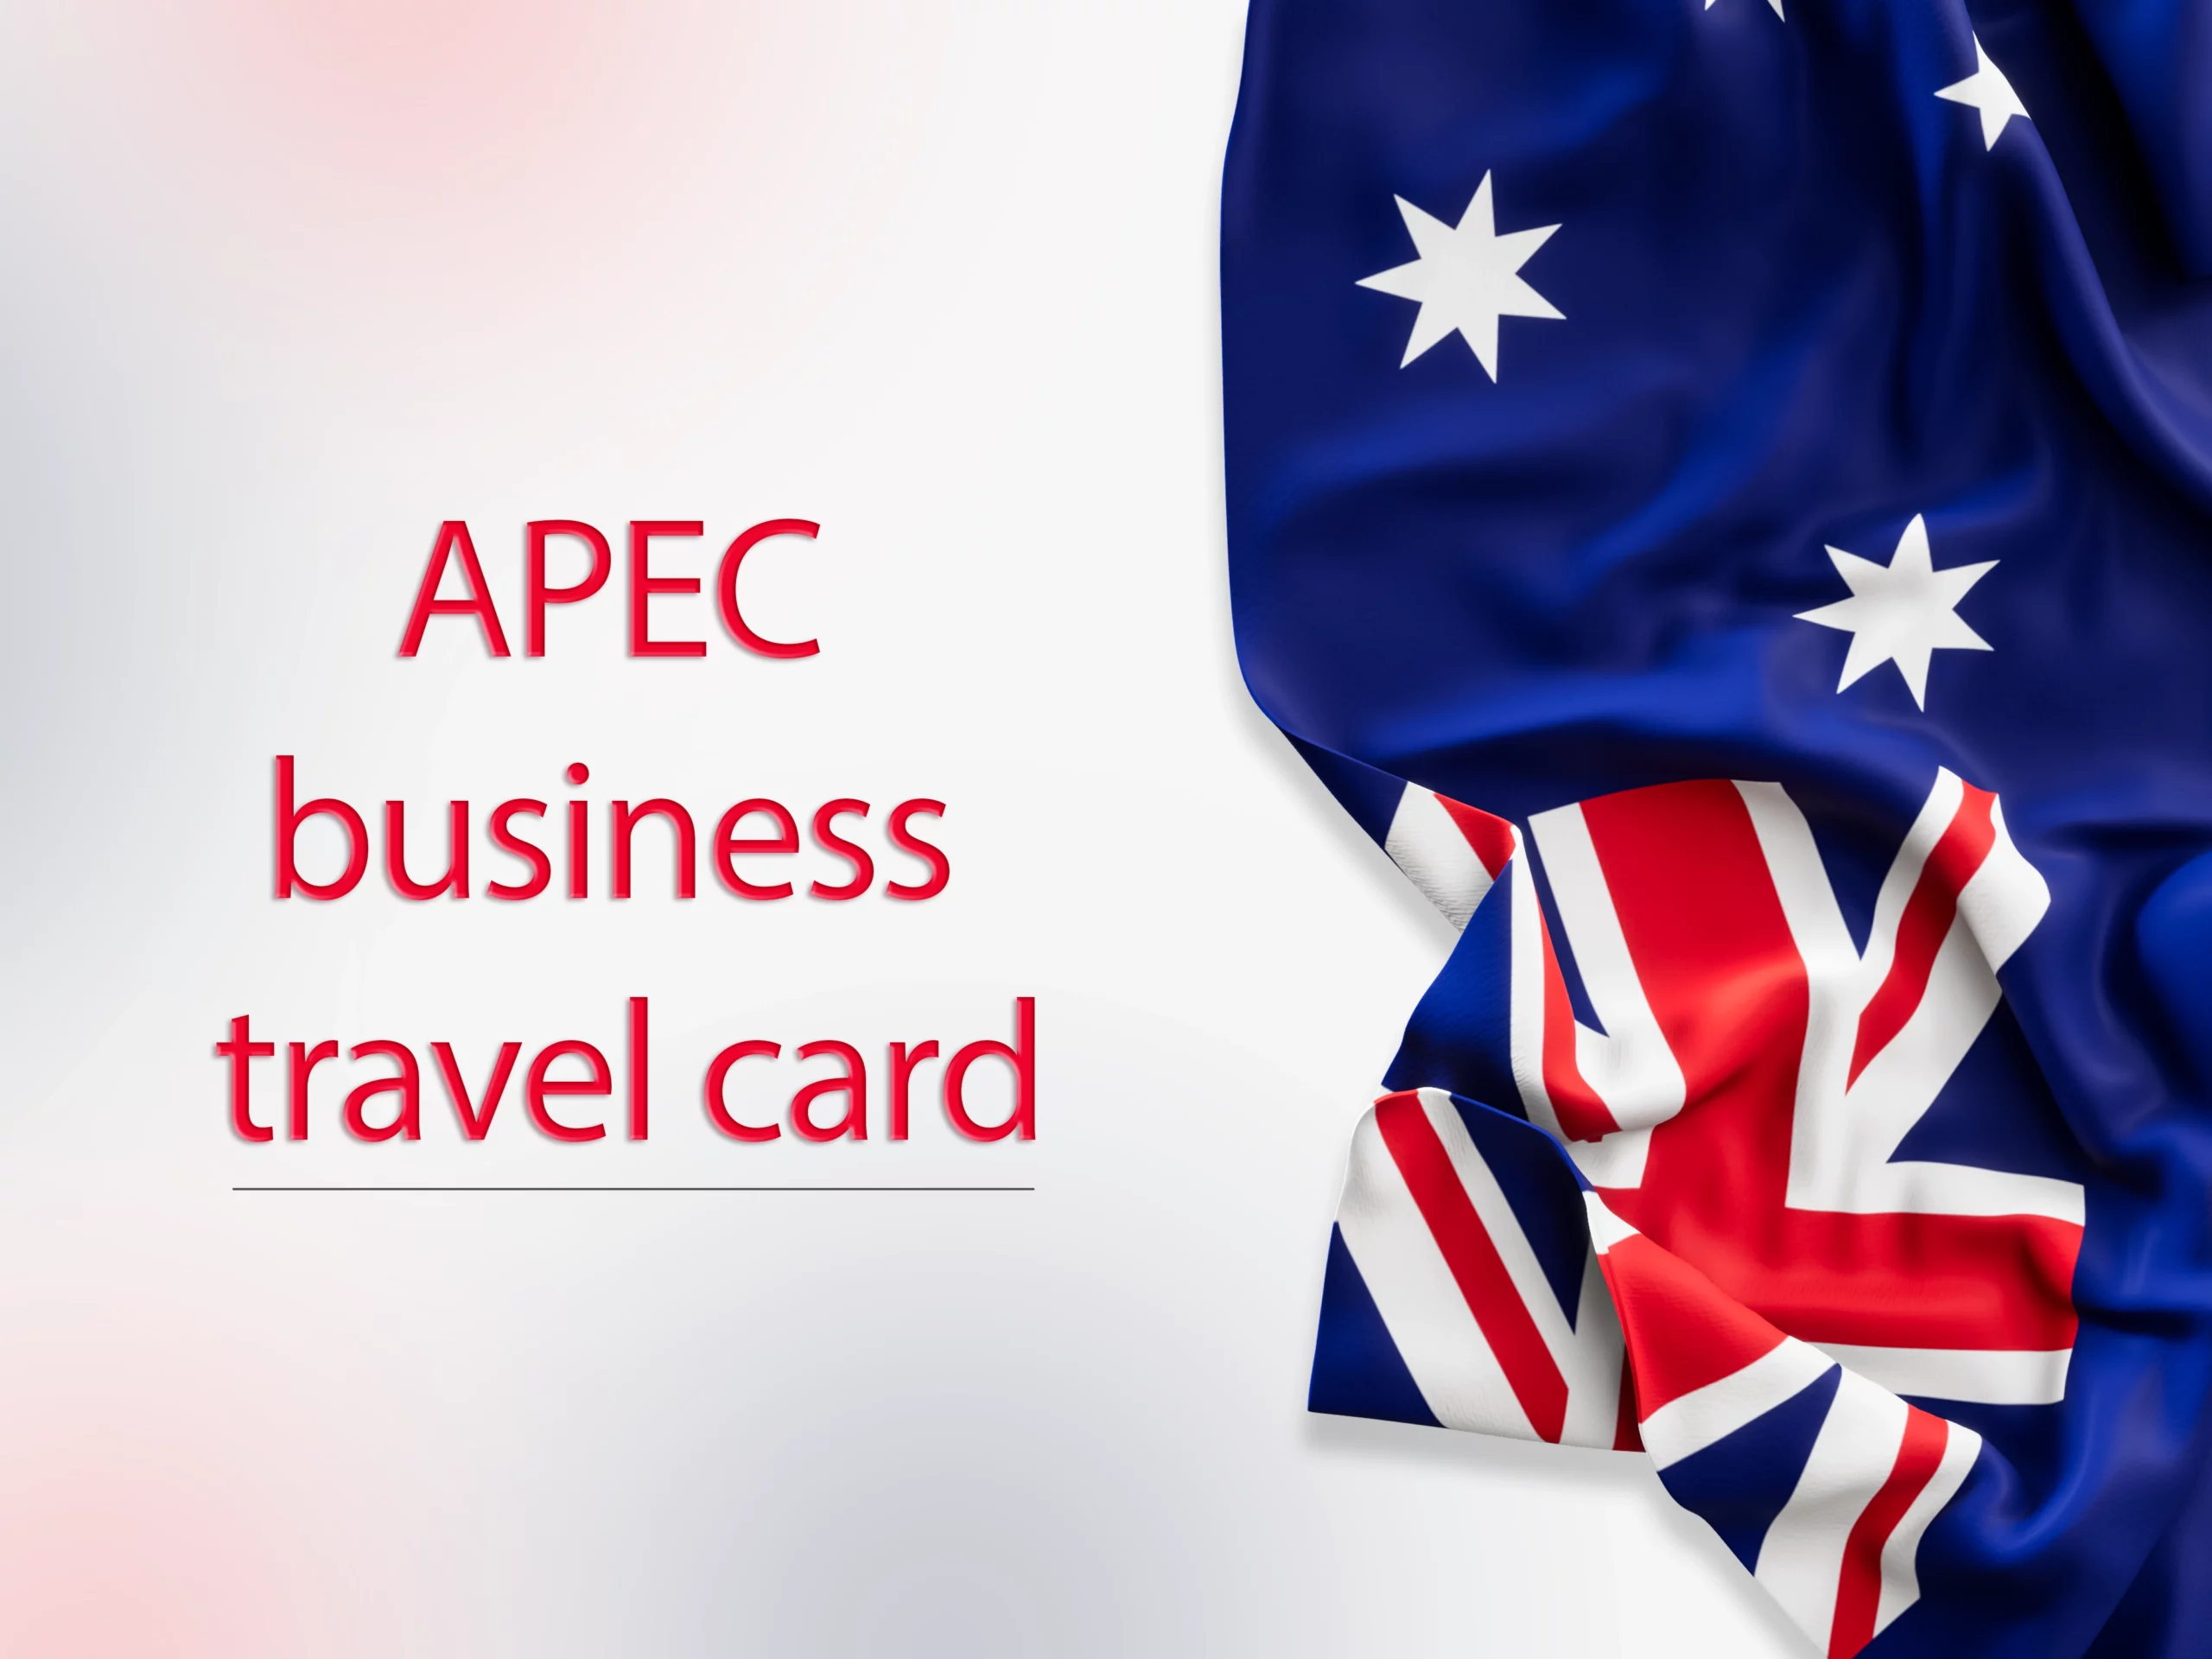 apec business travel card worth it reddit